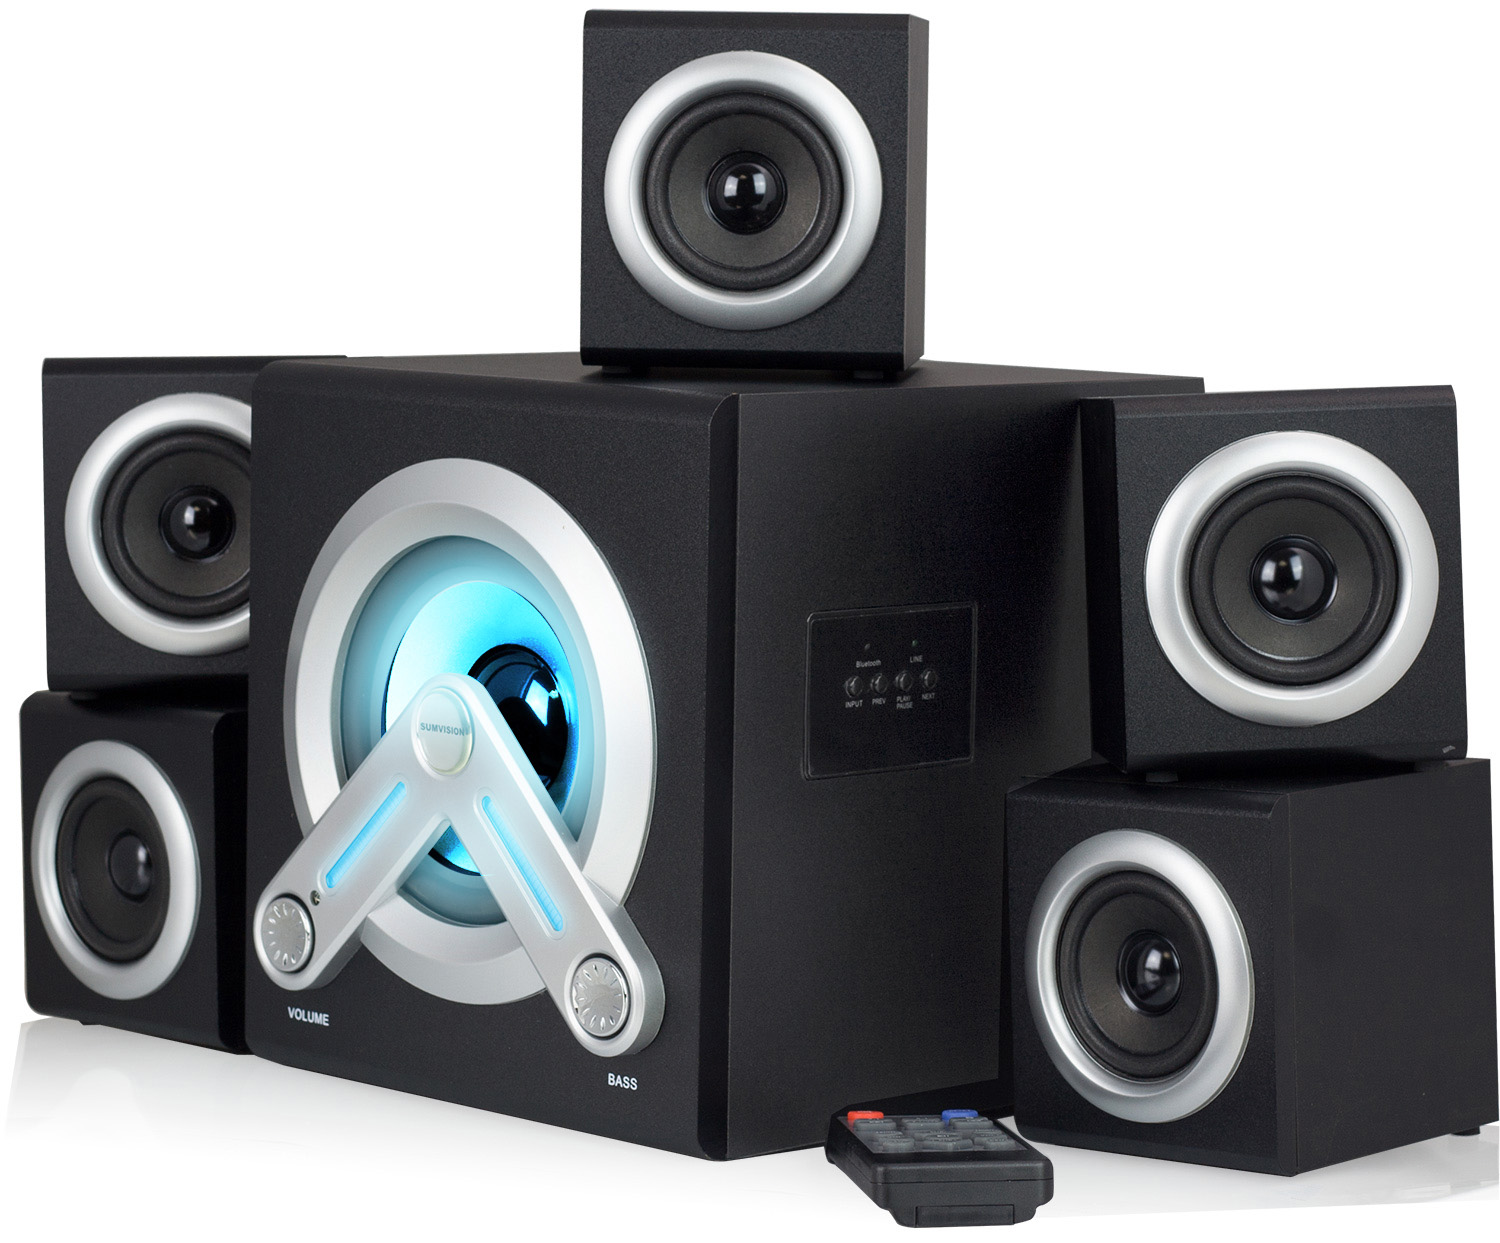 Refurbished Sumvision V-Cube 5.1 Surround Sound Computer Cinema Speaker System Inc Bluetooth and AUX